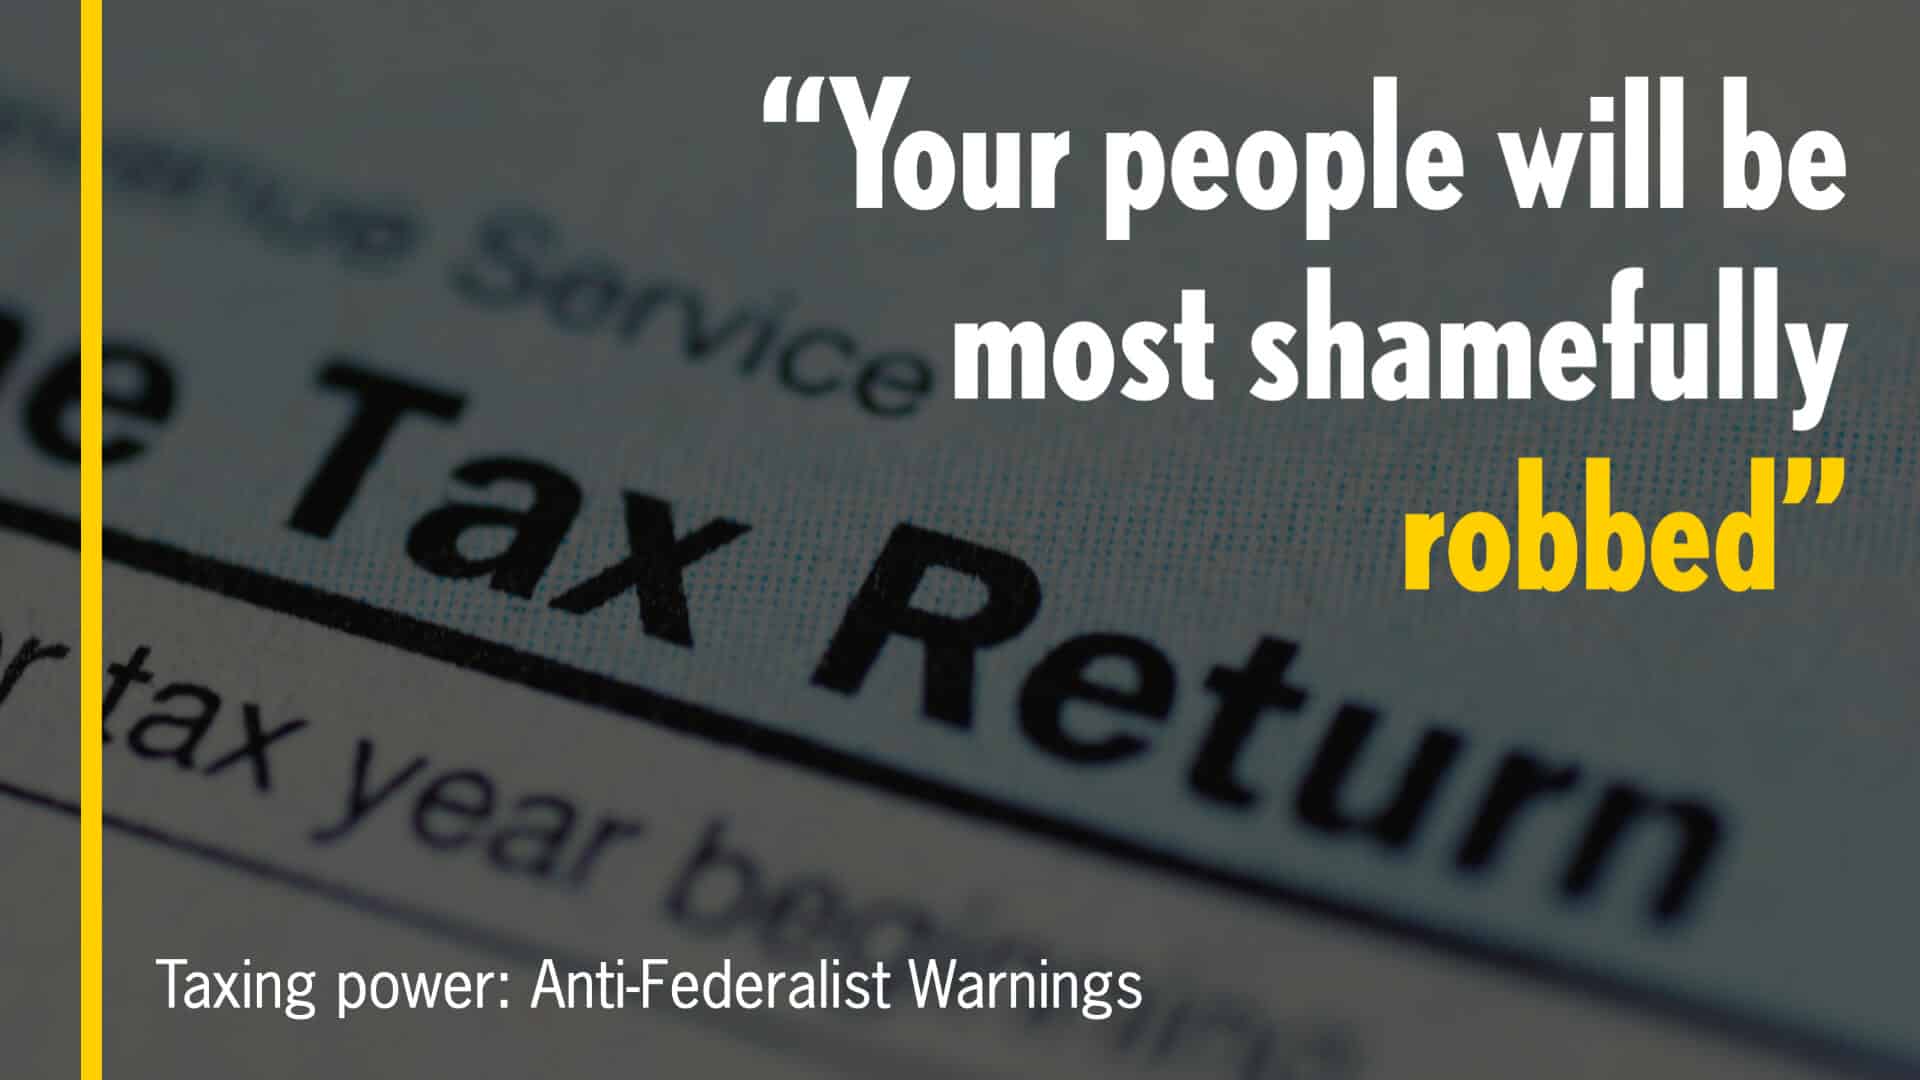 Taxation: Anti-Federalist Warnings Ignored